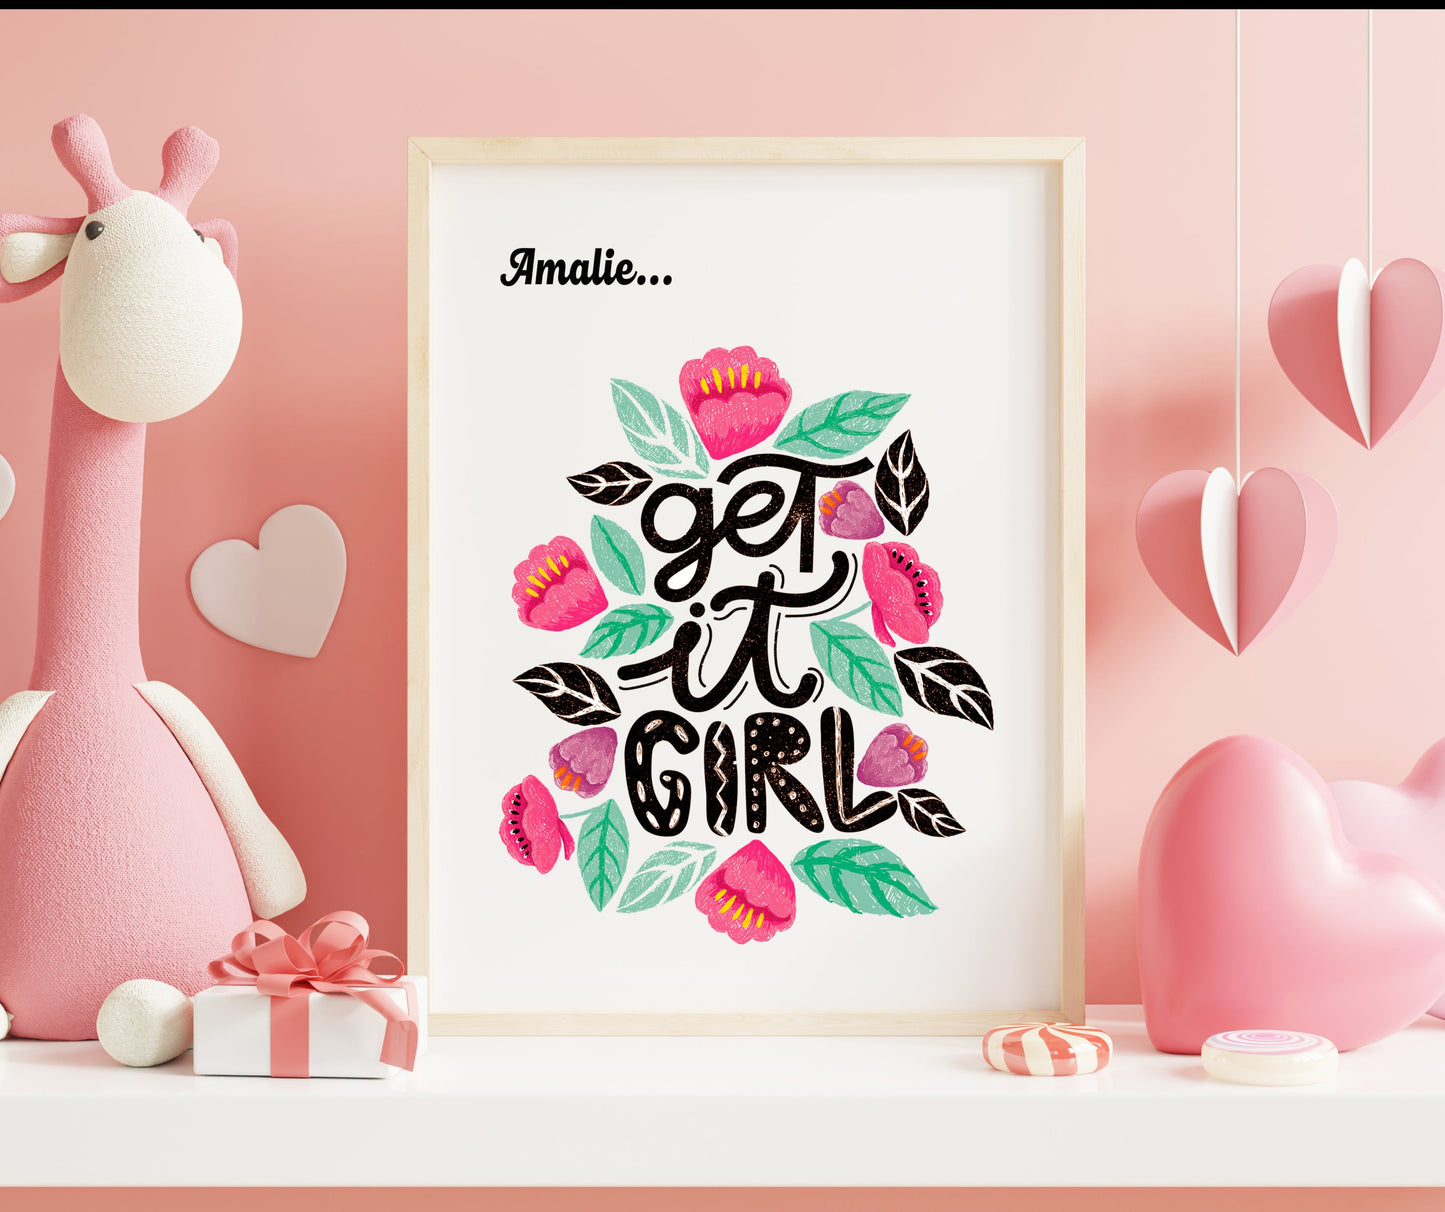 Get it Girl Print, Girl's Room Wall Art Print, Kids Bedroom Prints, Inspirational Quote Print Girl's Bedroom